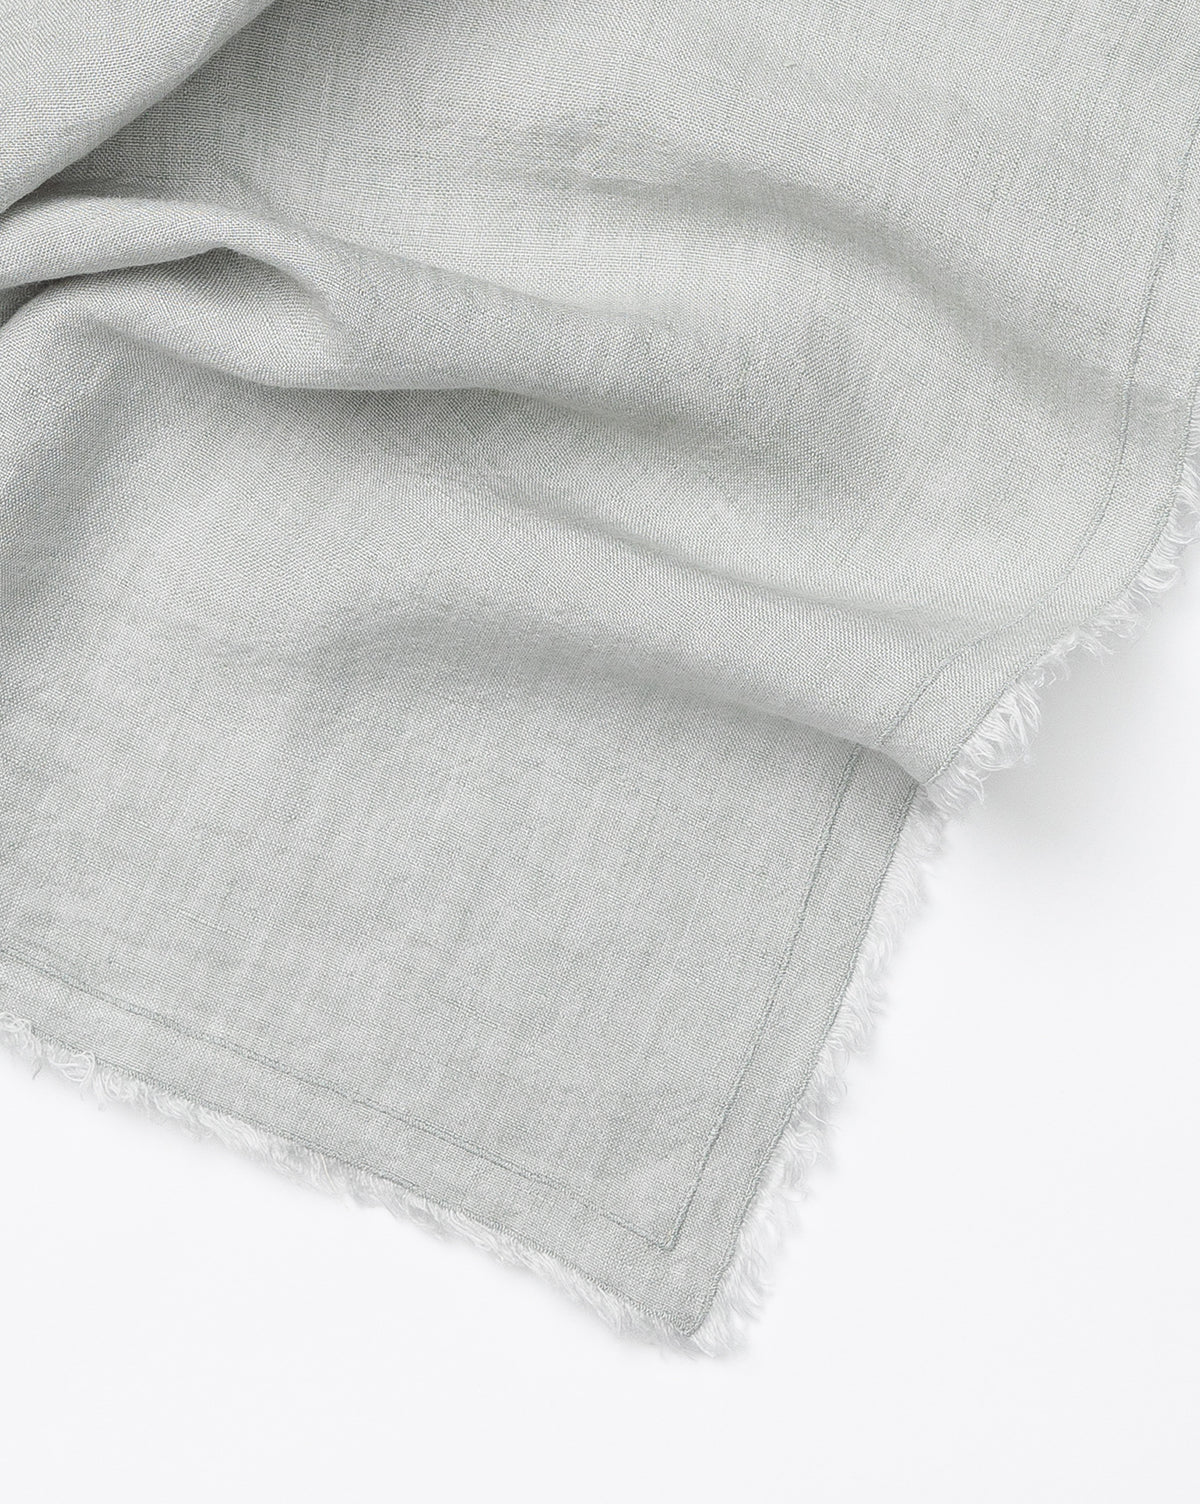 Border Stitch Linen Napkins (Set of 4) – McGee & Co.